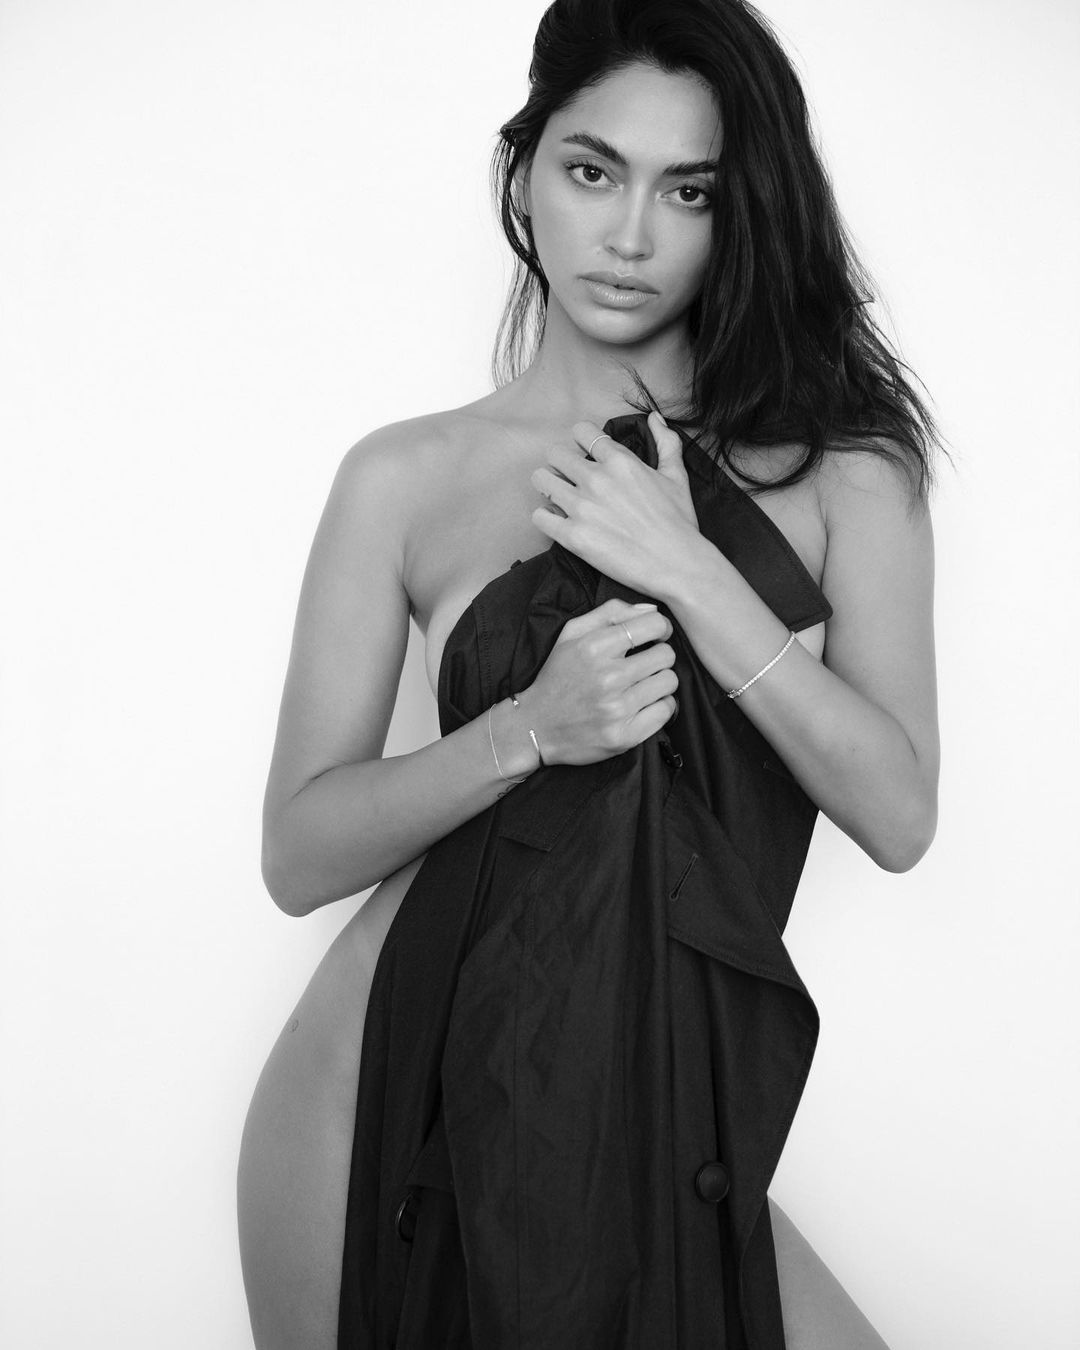 Ambra Gutierrez Portrait Photoshoot Wearing Calvin Klein Black Lingerie in Miami, Florida